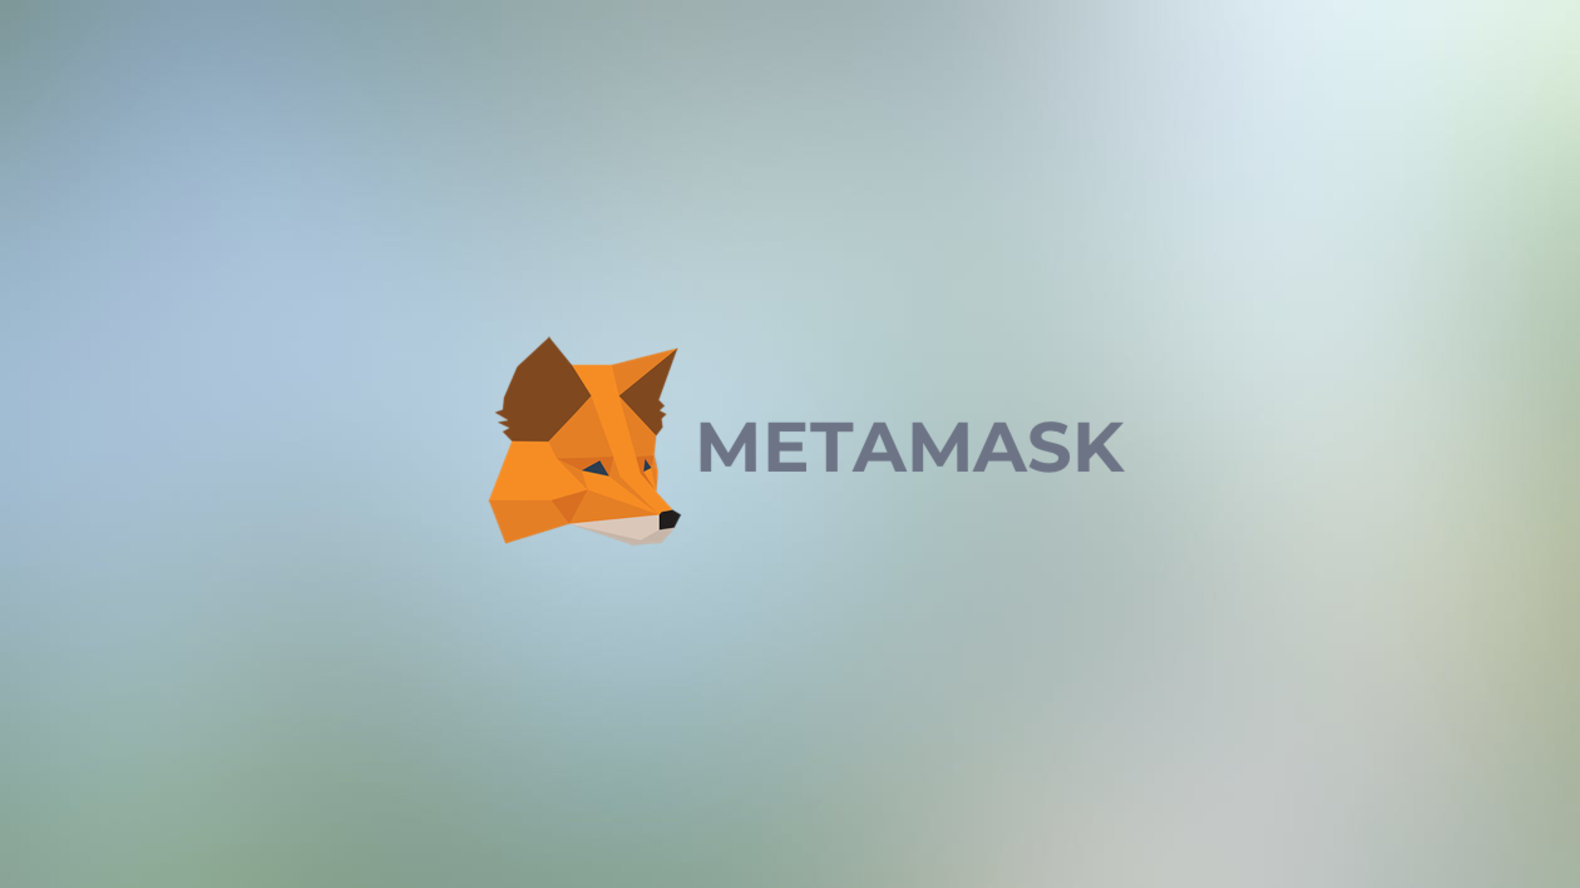 MetasdfsMasdfssk引入了令牌交换功能，集成了DEX和聚